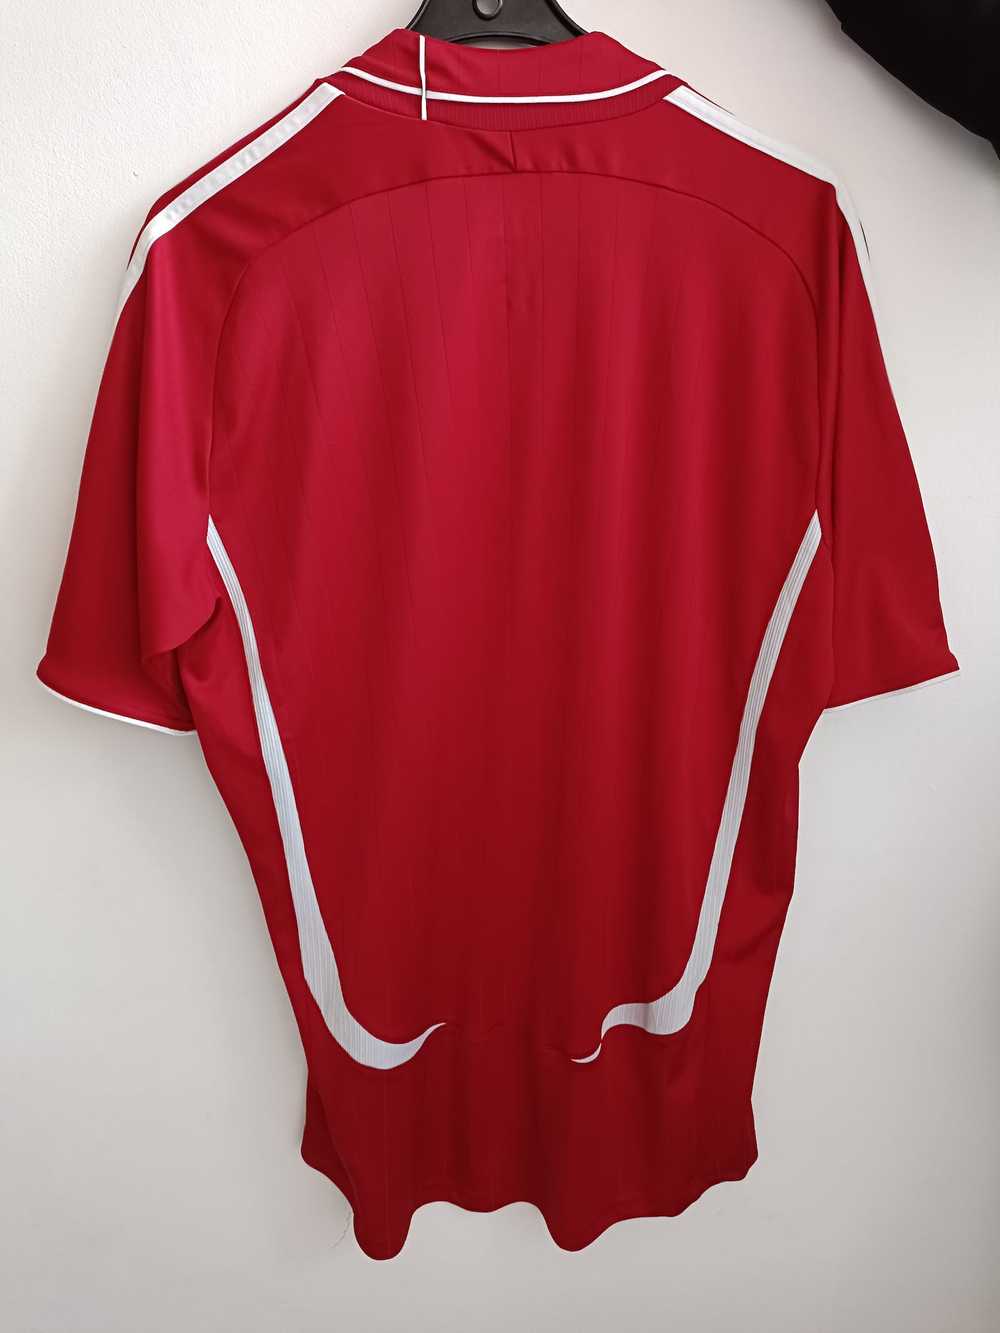 Adidas Original Vintage Denmark jersey - image 5